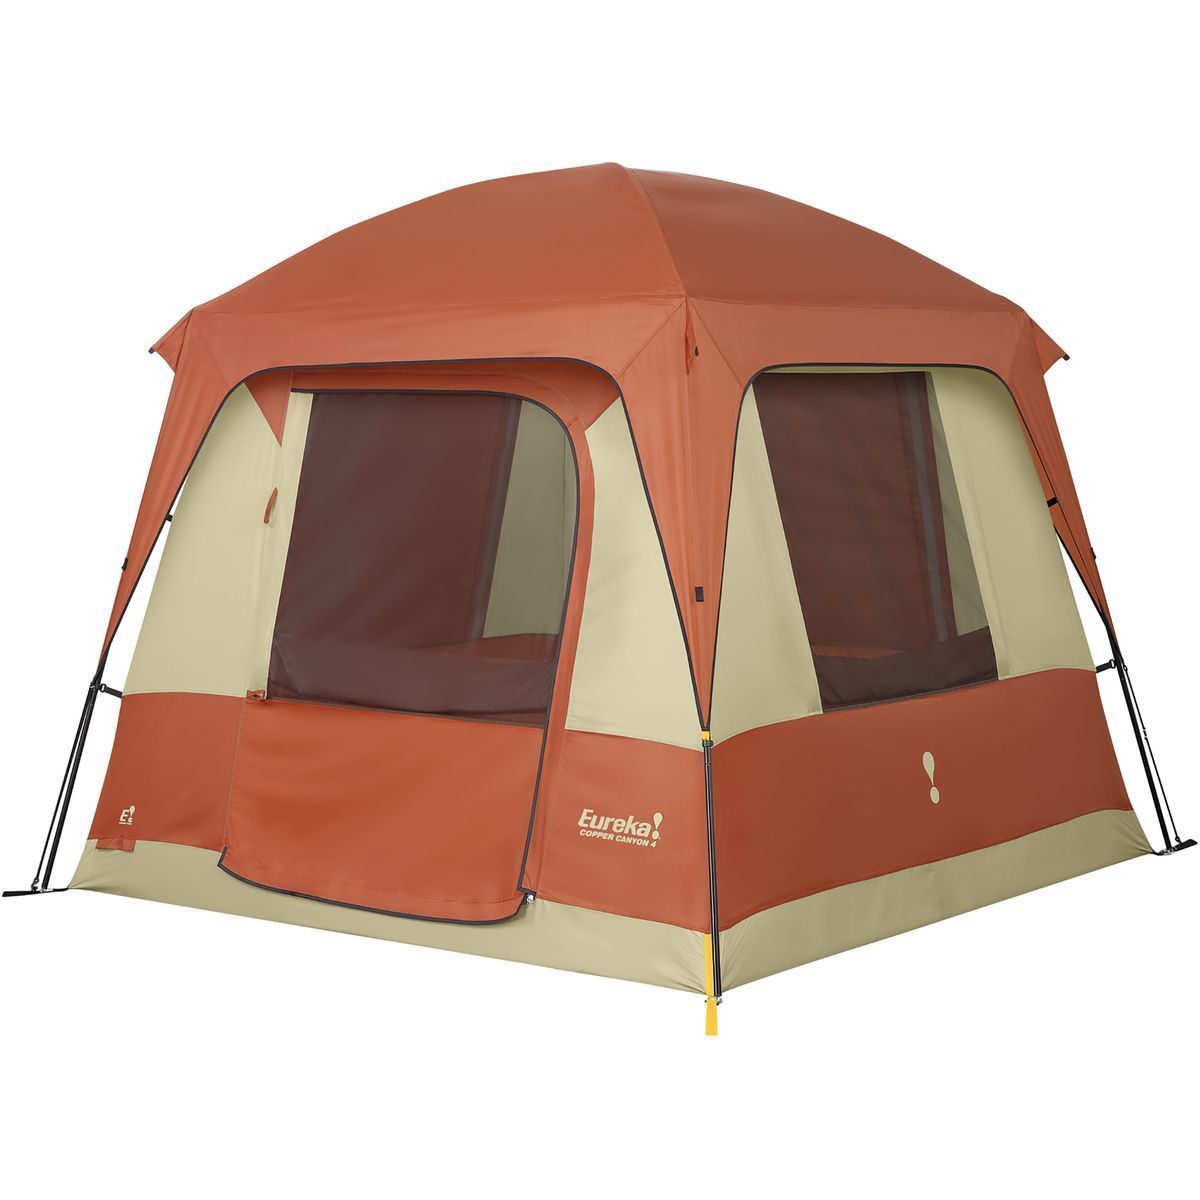 Eureka Copper Canyon 4 Tent